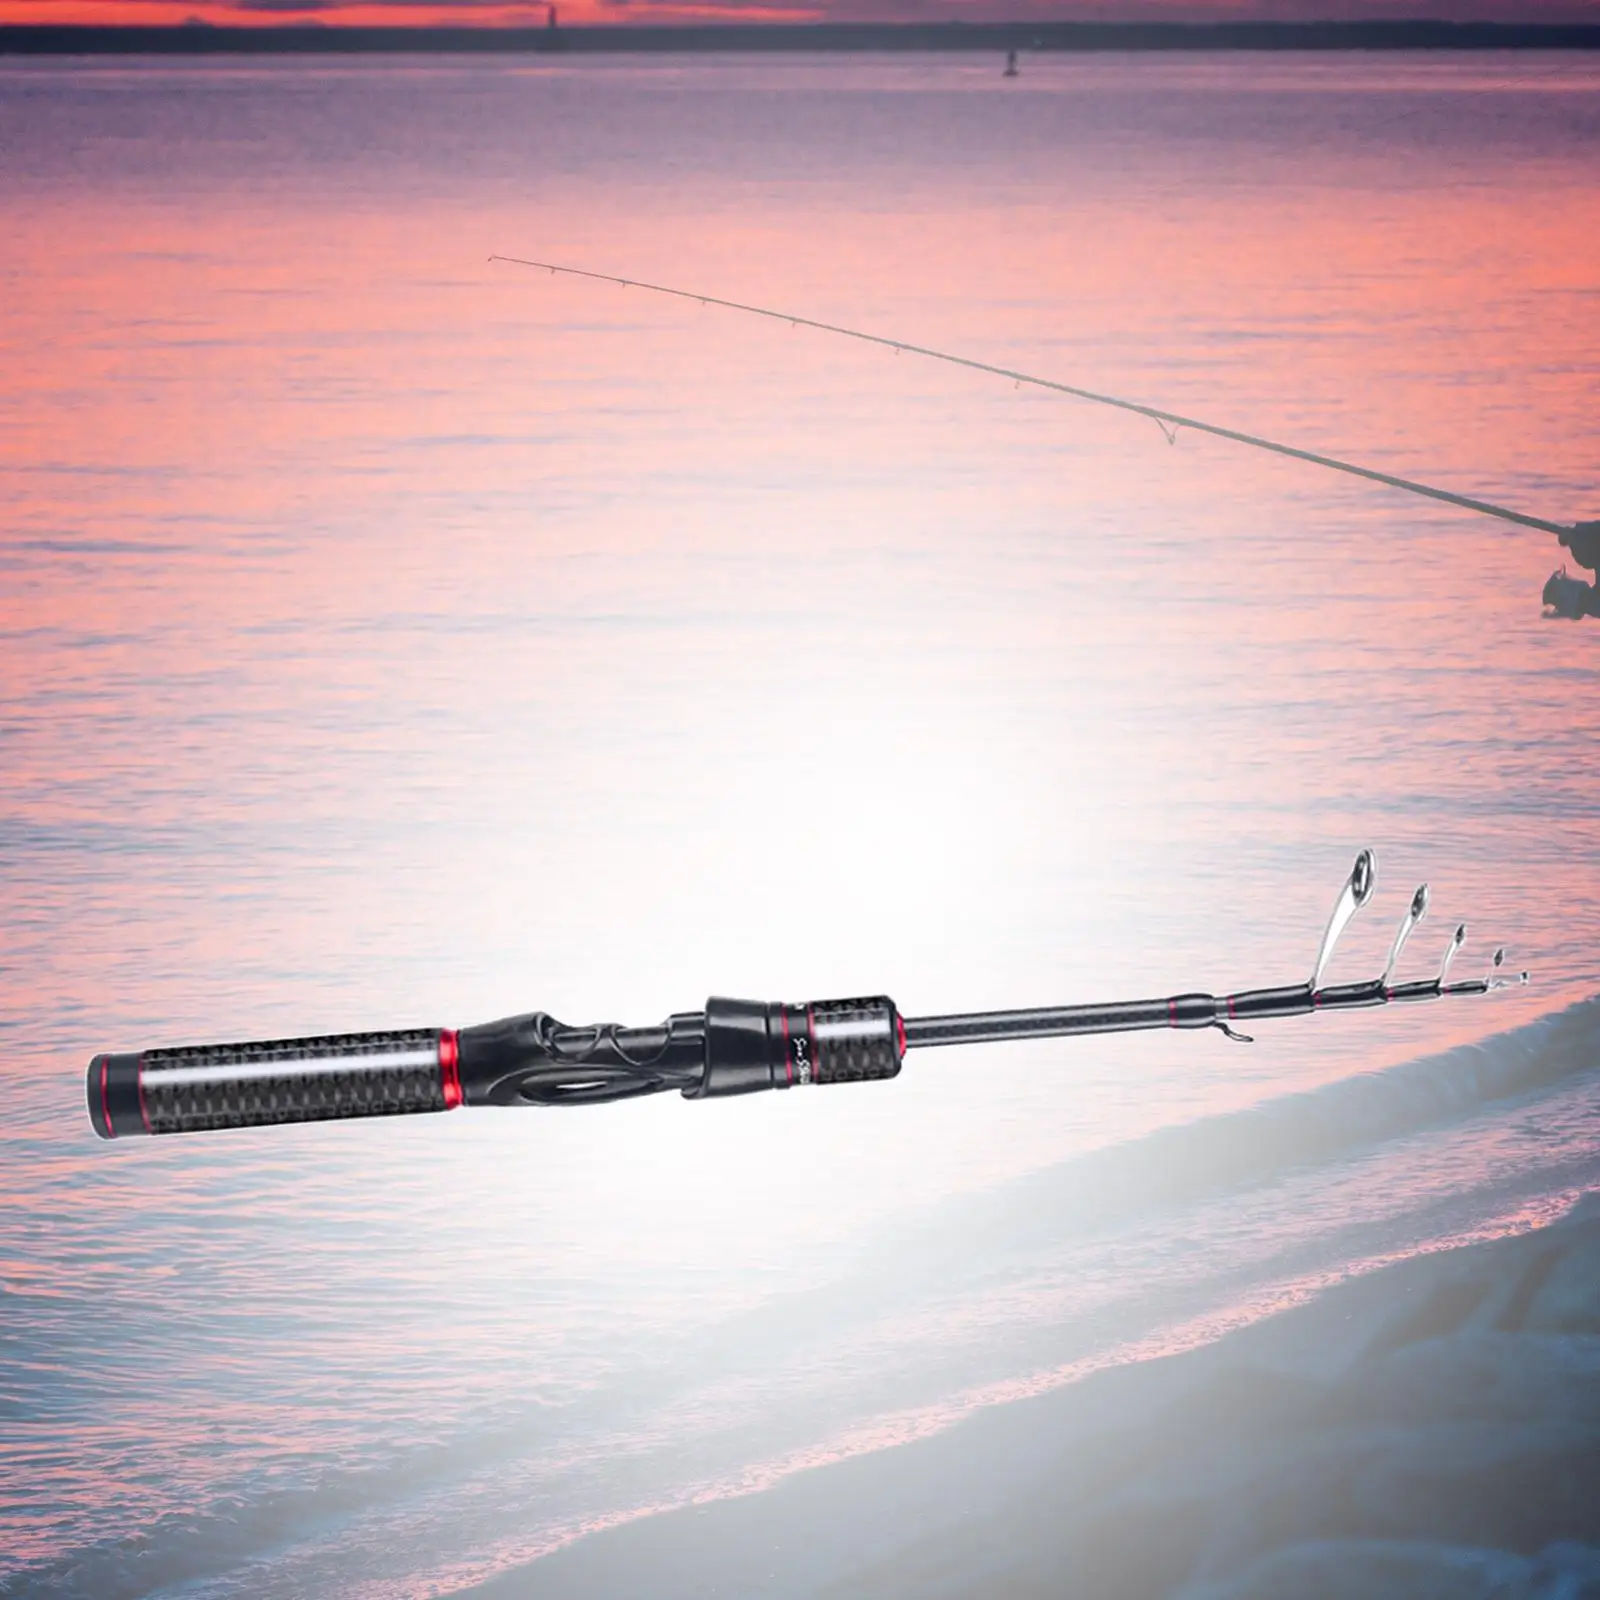 Carbon Fiber Fishing Rod Fishing Tool Fish Rod Lightweight Comfortable Handle Telescopic Fishing Pole for Salmon Trout Travel